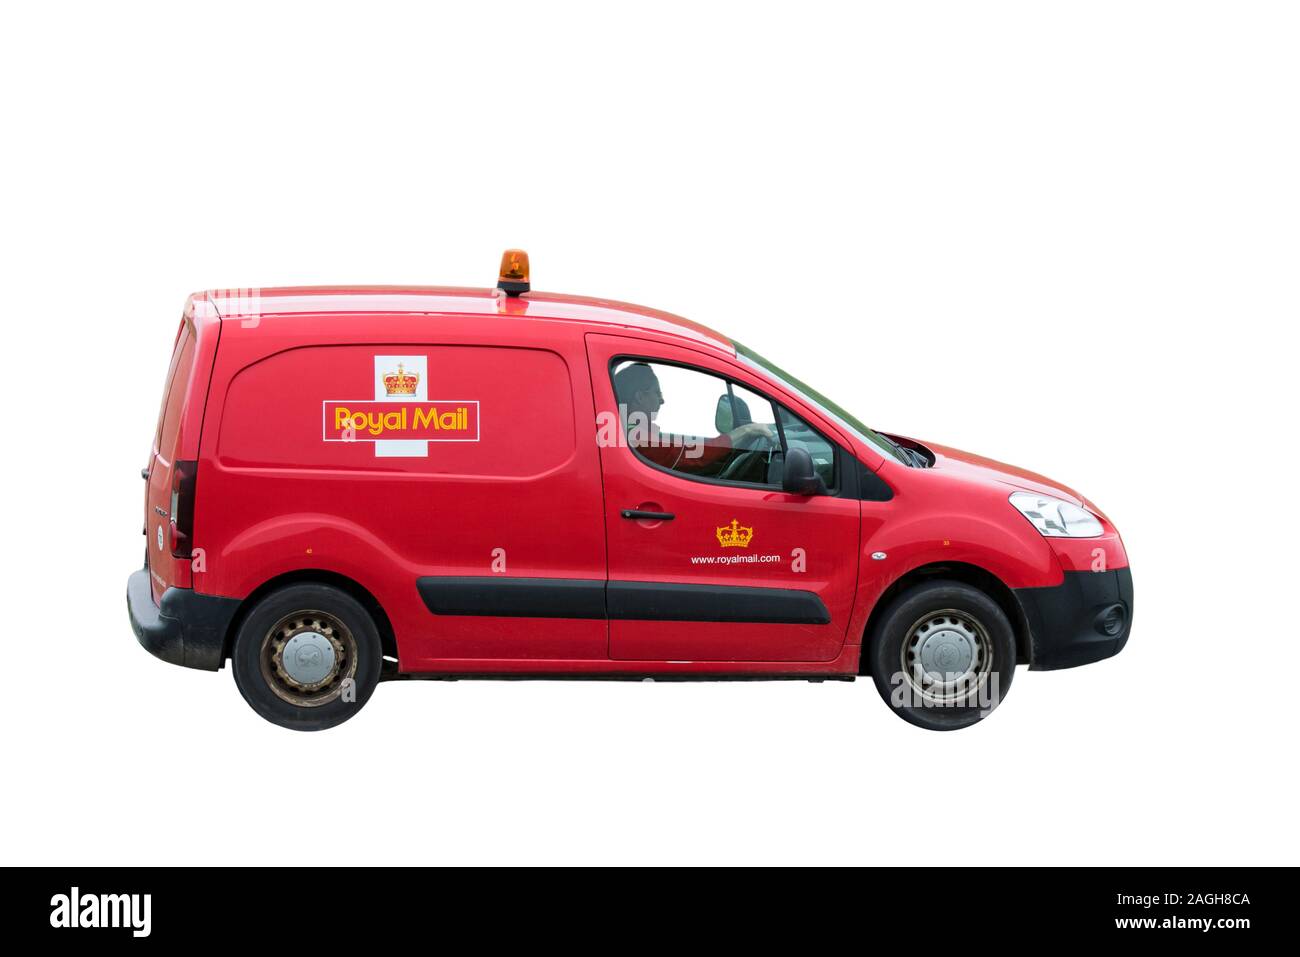 UK postman driving red Peugeot Partner British Royal Mail poster van against white background Banque D'Images